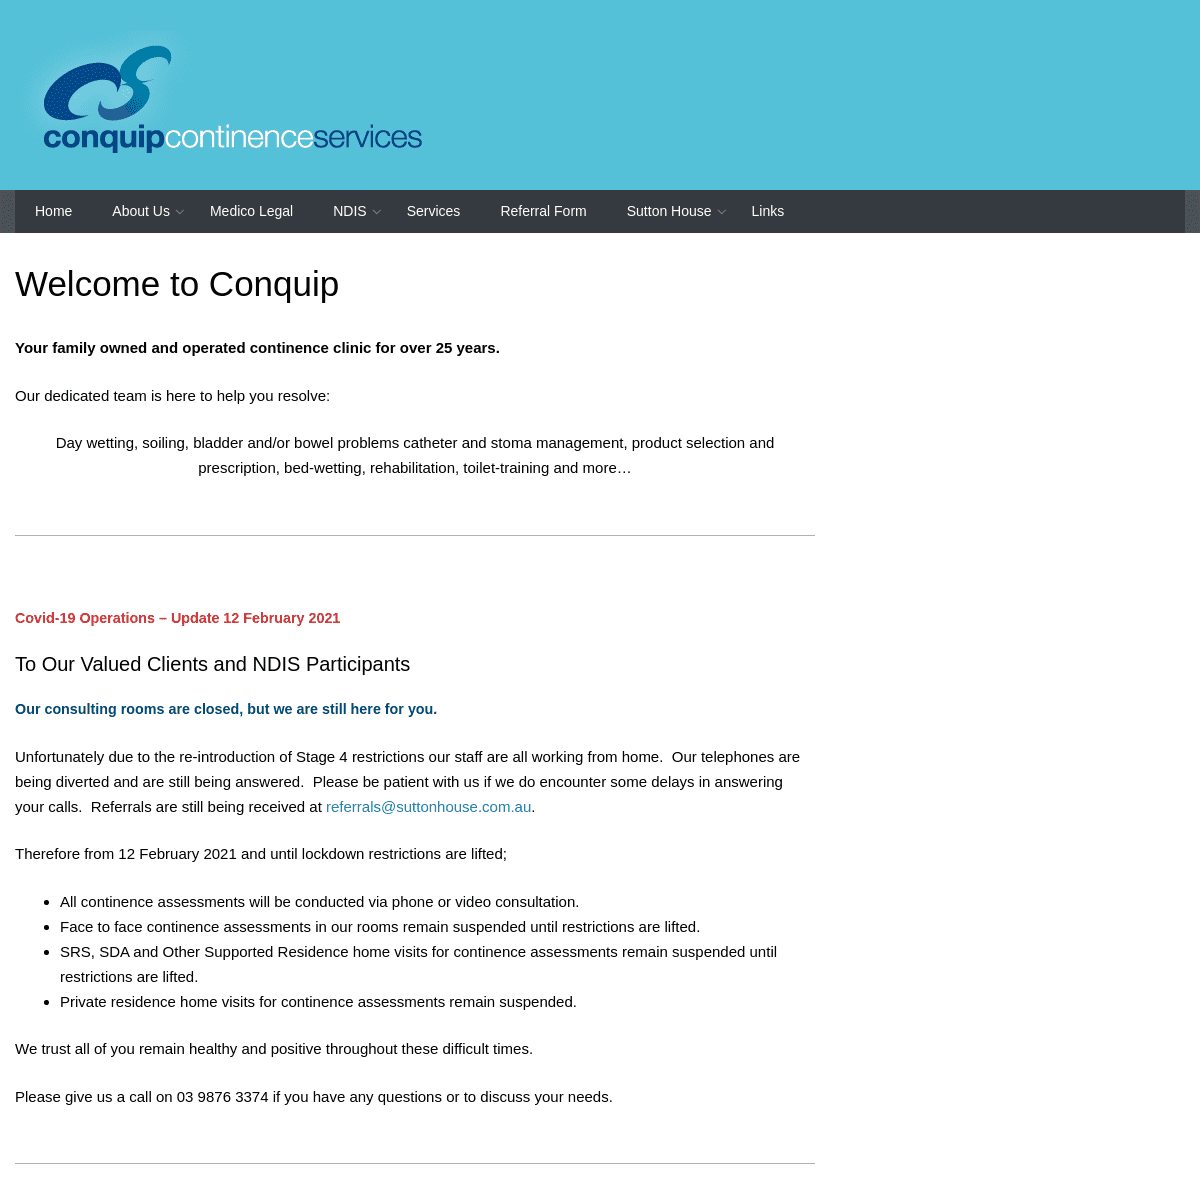 A complete backup of https://conquip.net.au